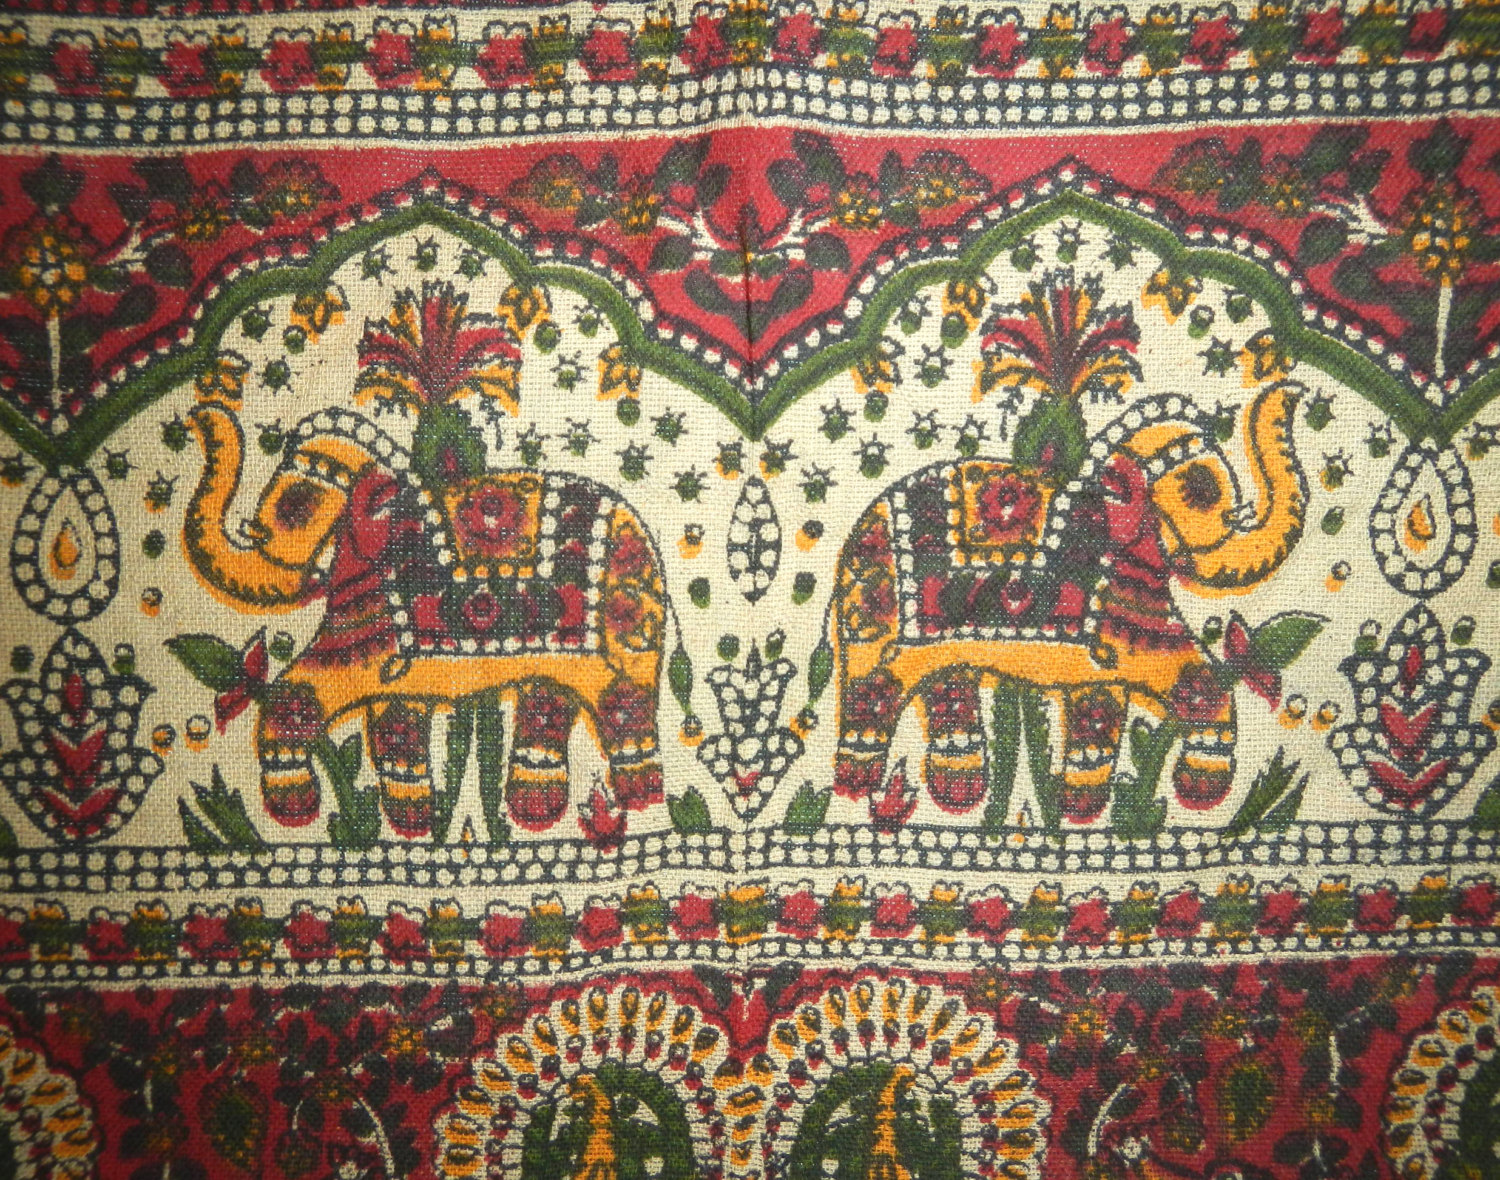 Hippie Tapestry Fabric Bohemian Indian By Sticksandstoneshemp1